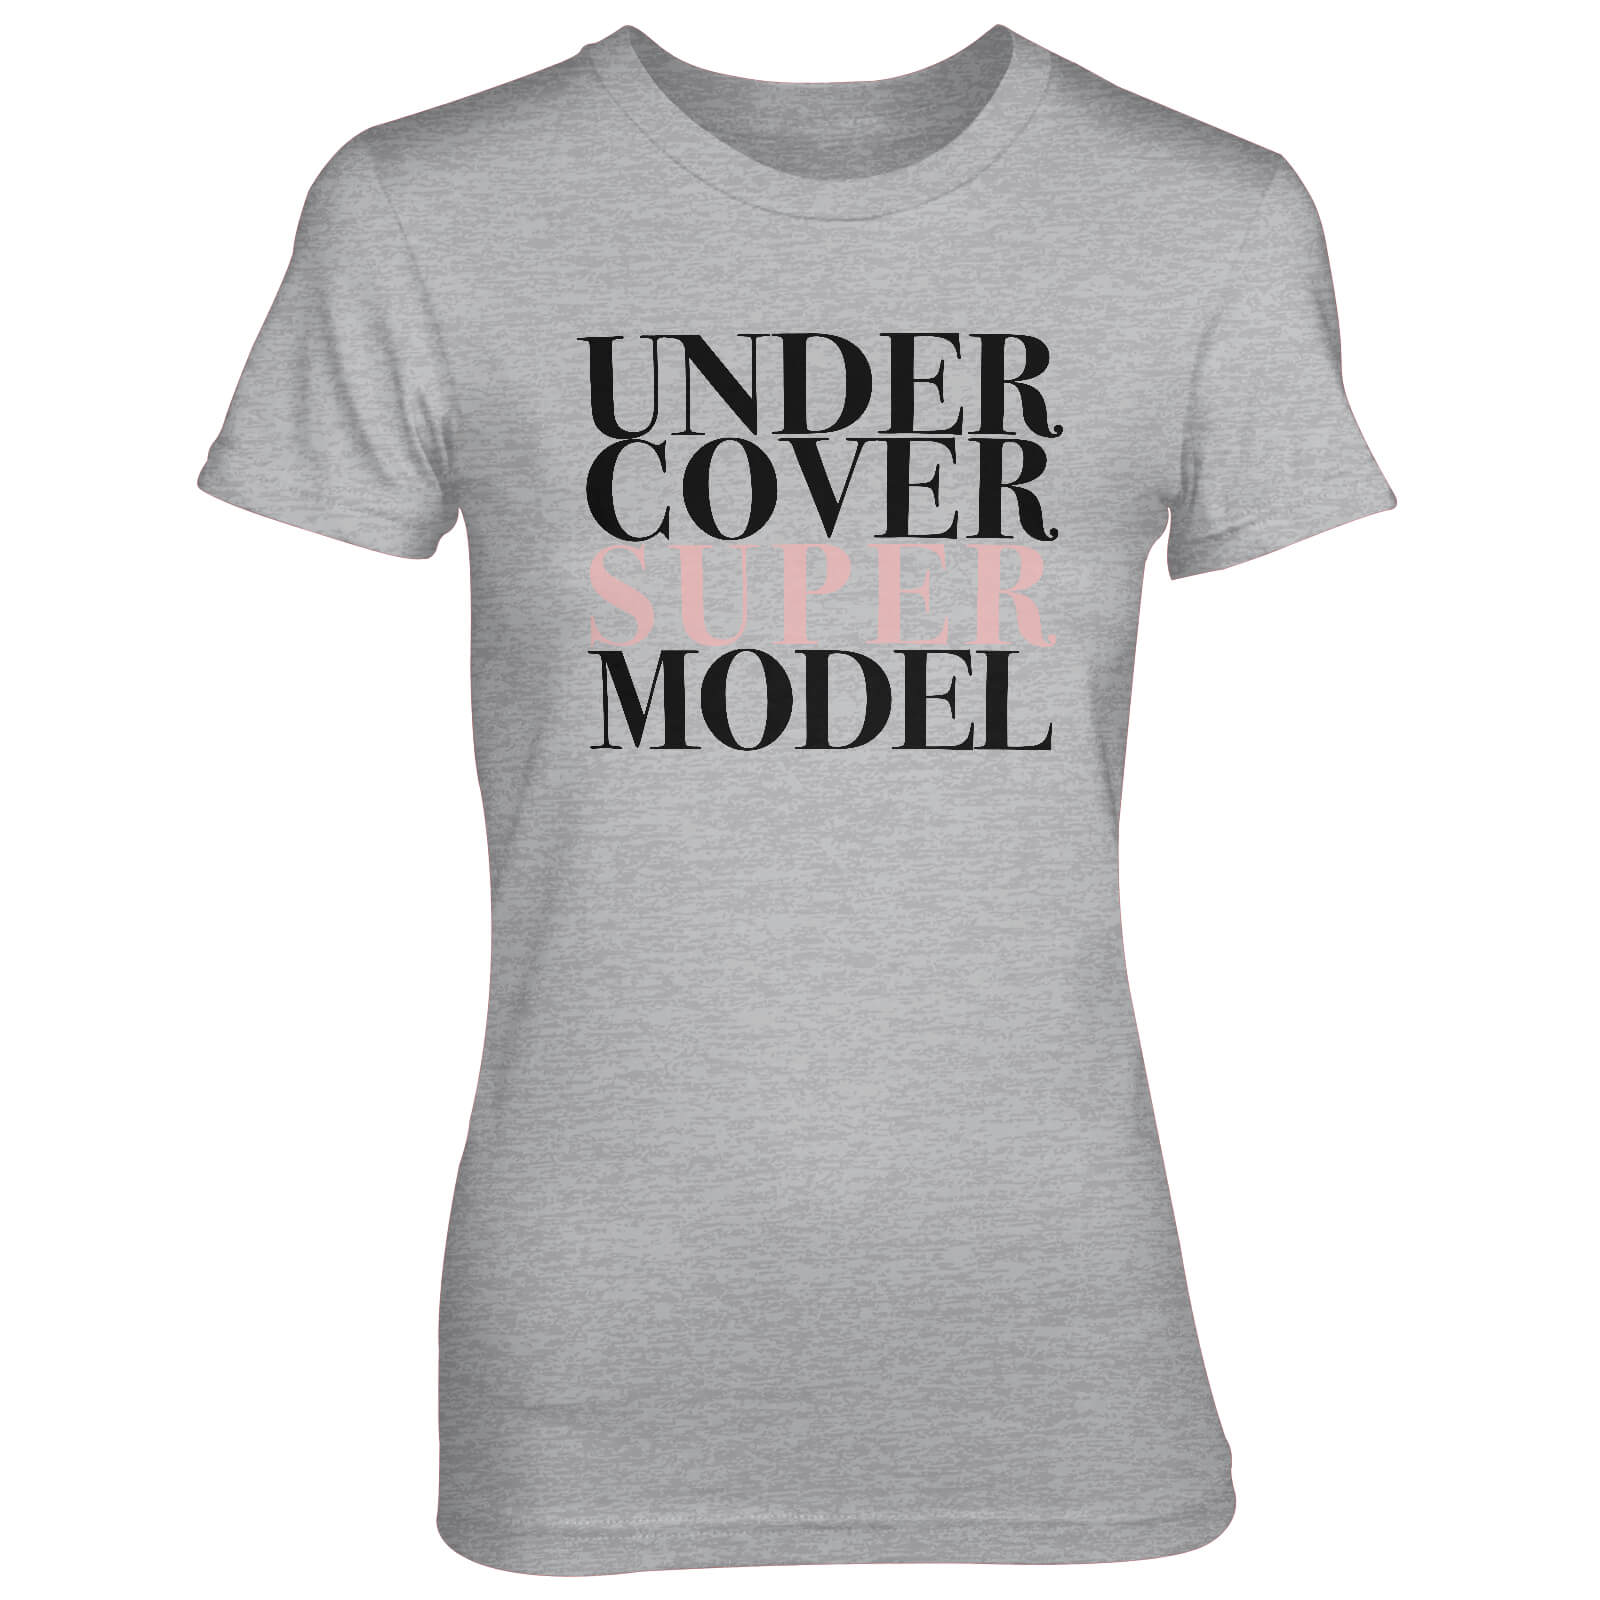 Under Cover Super Model Women's Grey T-Shirt - S - Grey